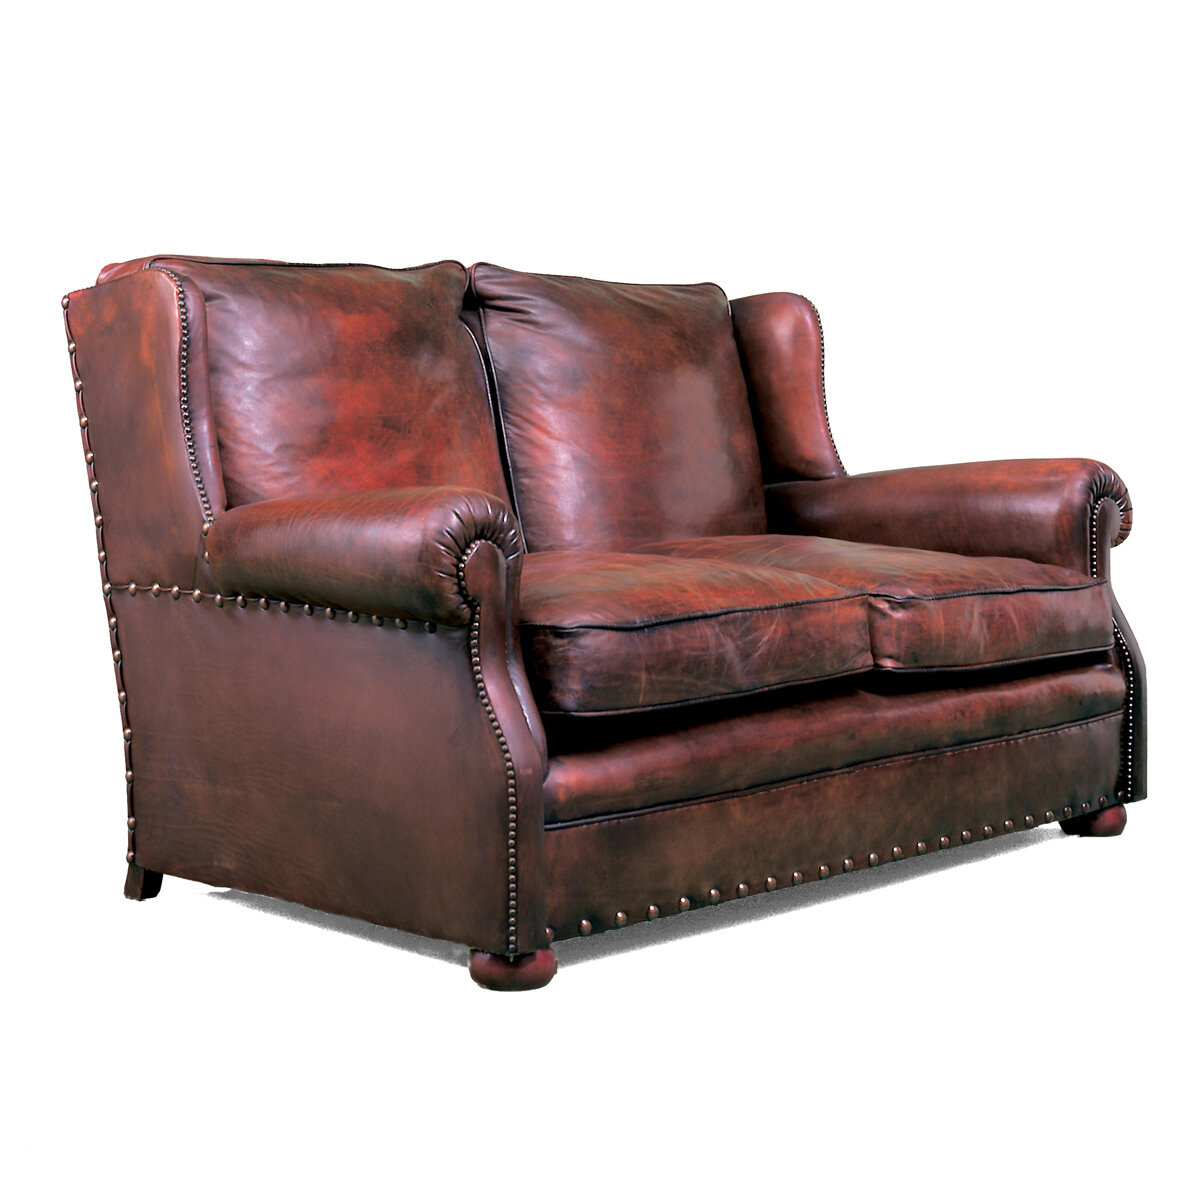 Chatsworth Leather Club Sofa